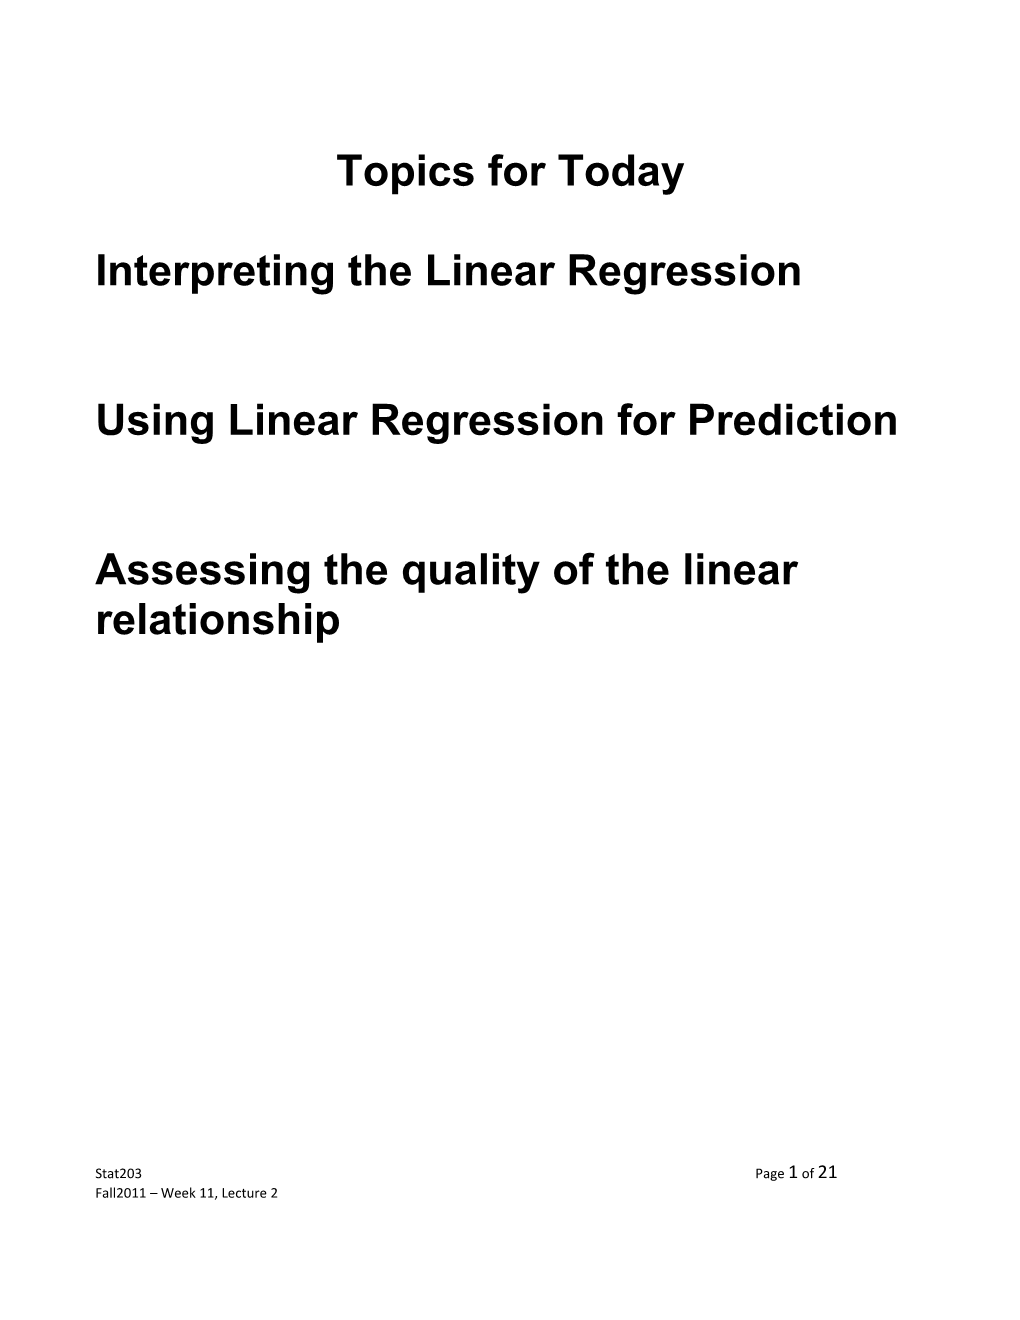 Interpreting the Linear Regression